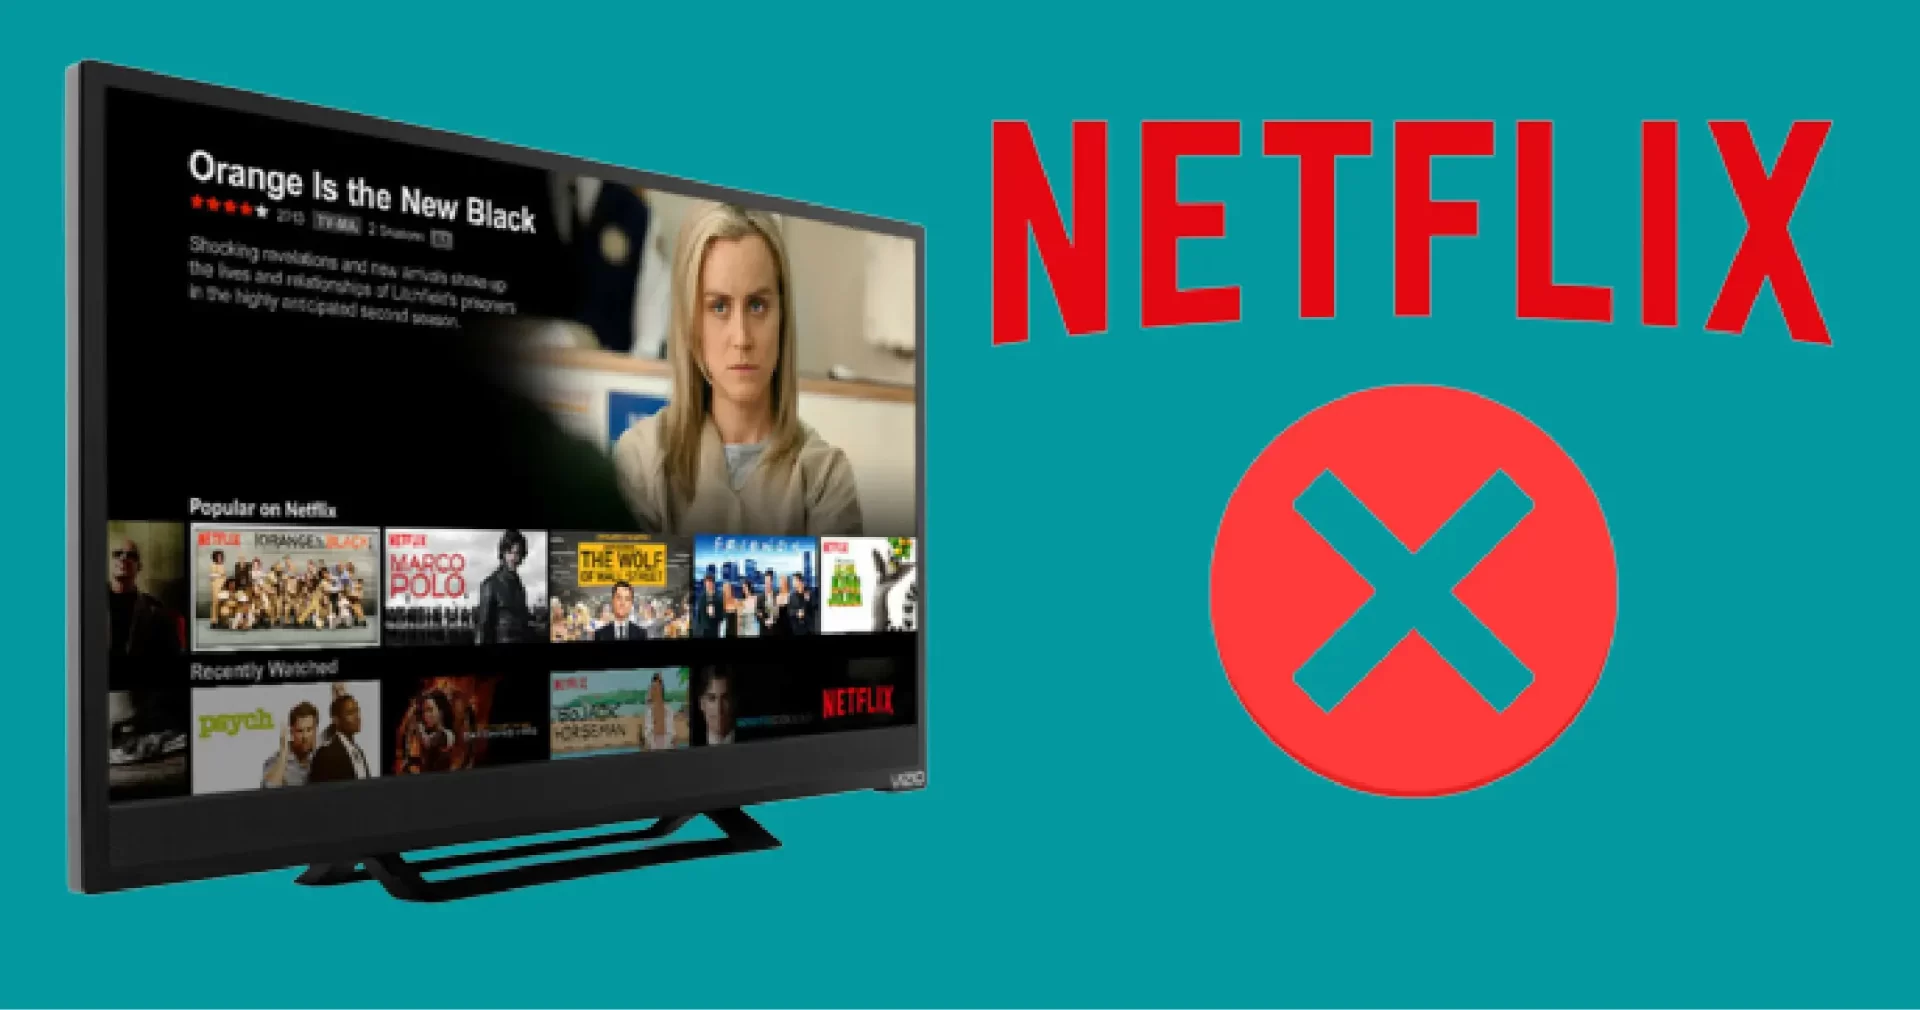 Netflix Not Working On Vizio Smart TV